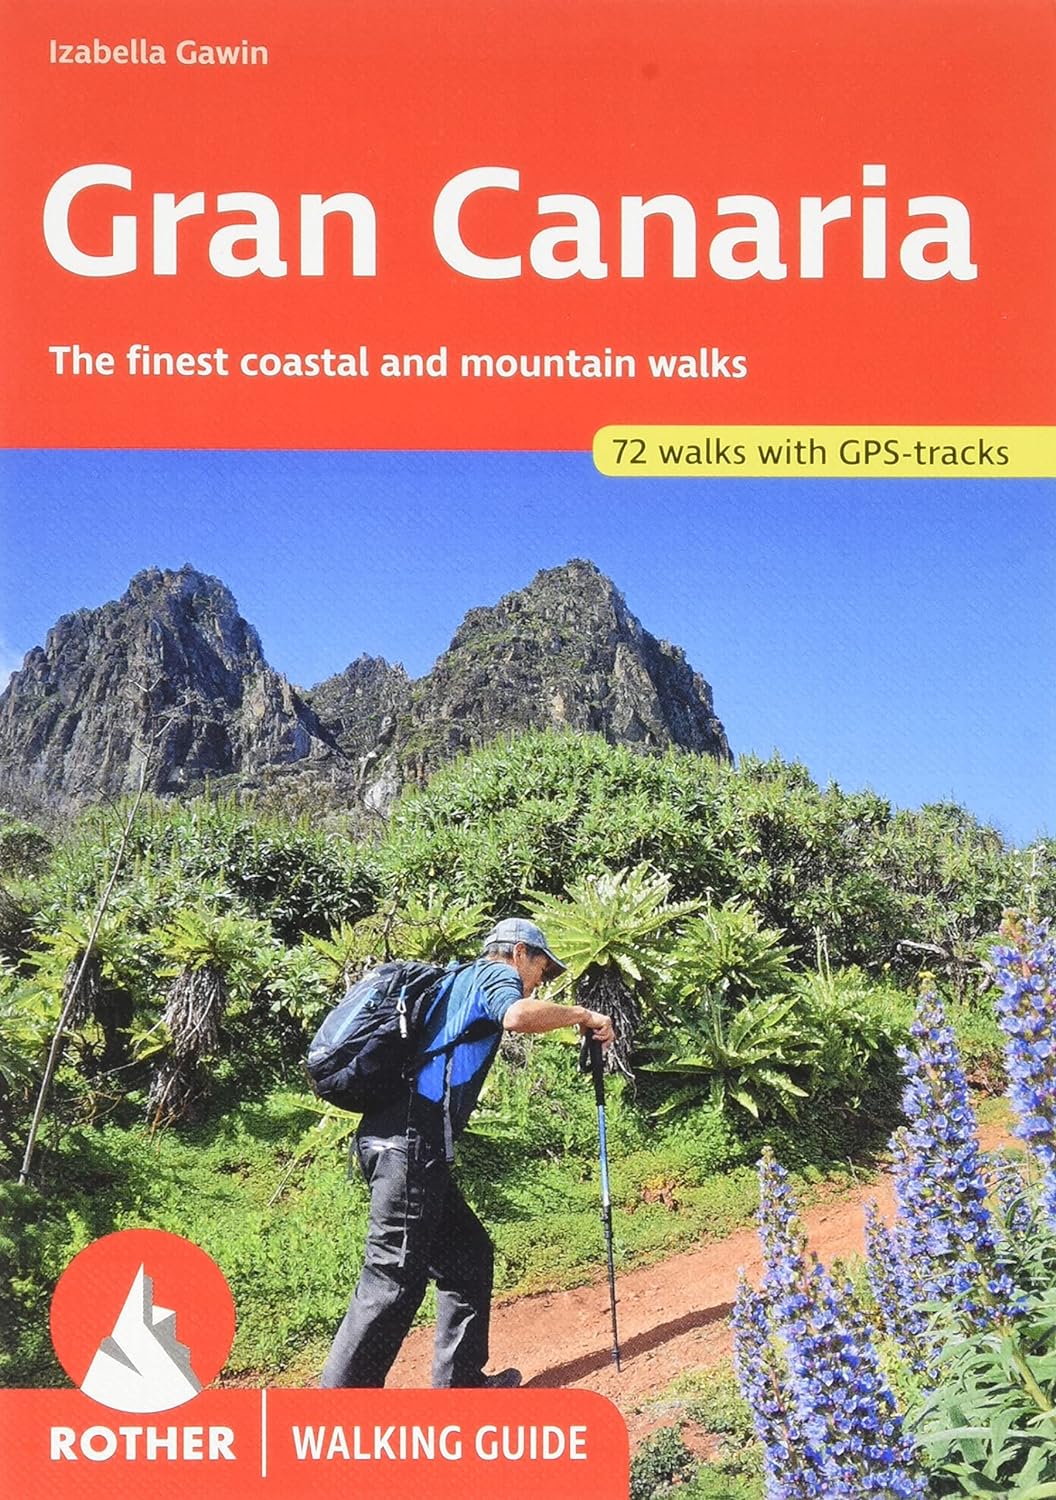 Online bestellen: Wandelgids Rother Wandefuhrer Spanje Gran Canaria | Rother Bergverlag